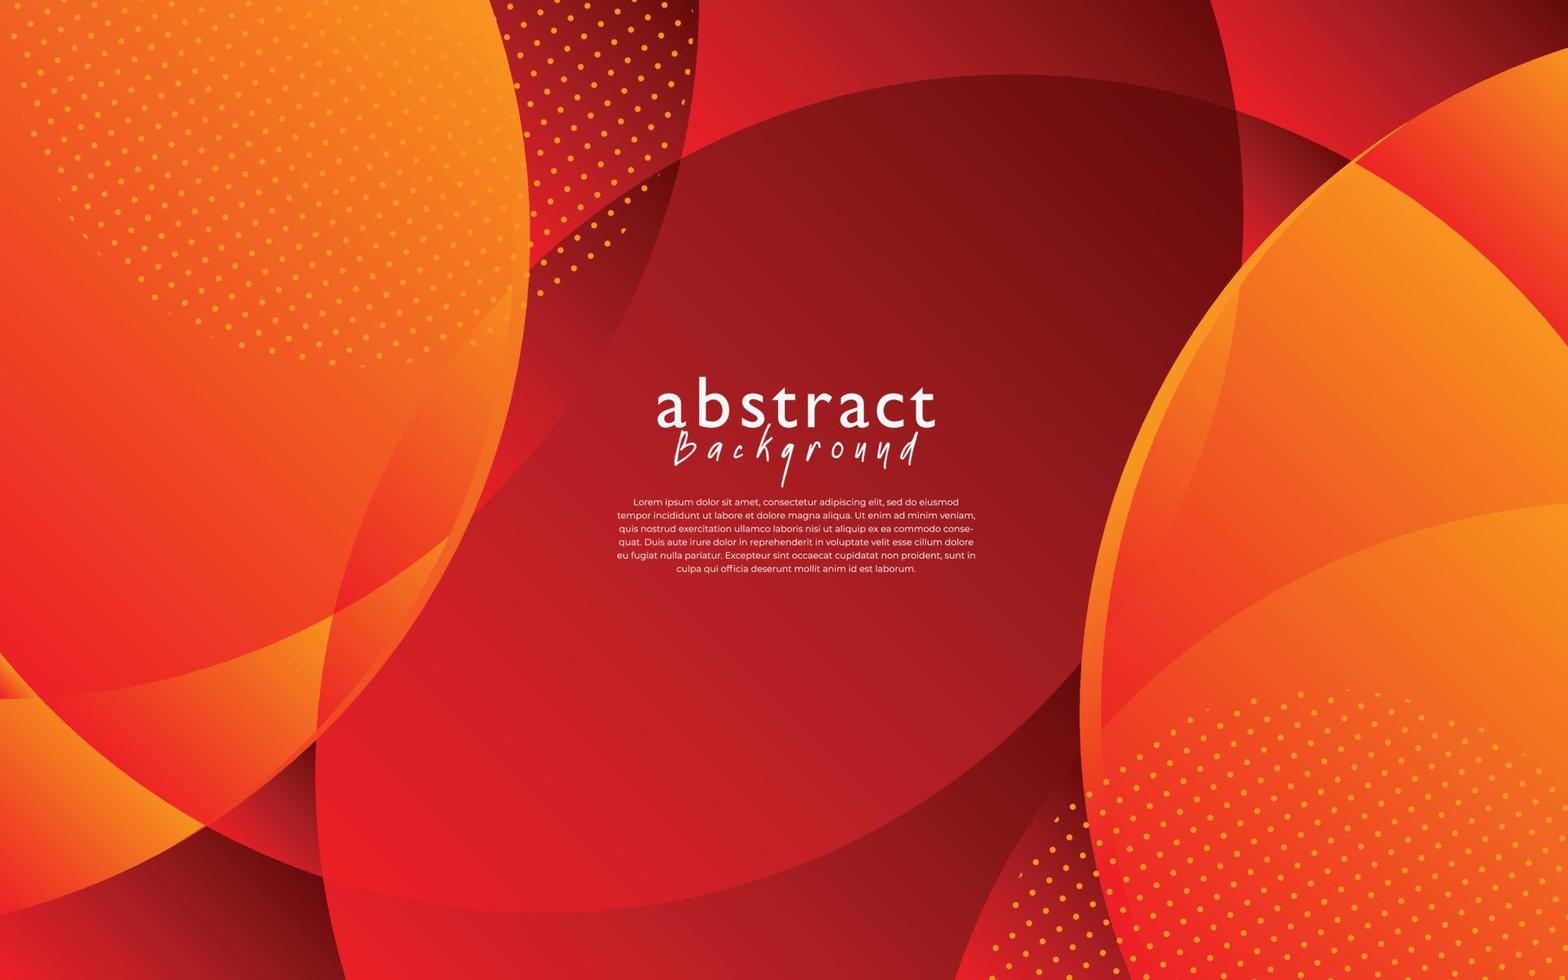 rood modern abstract ontwerp als achtergrond vector